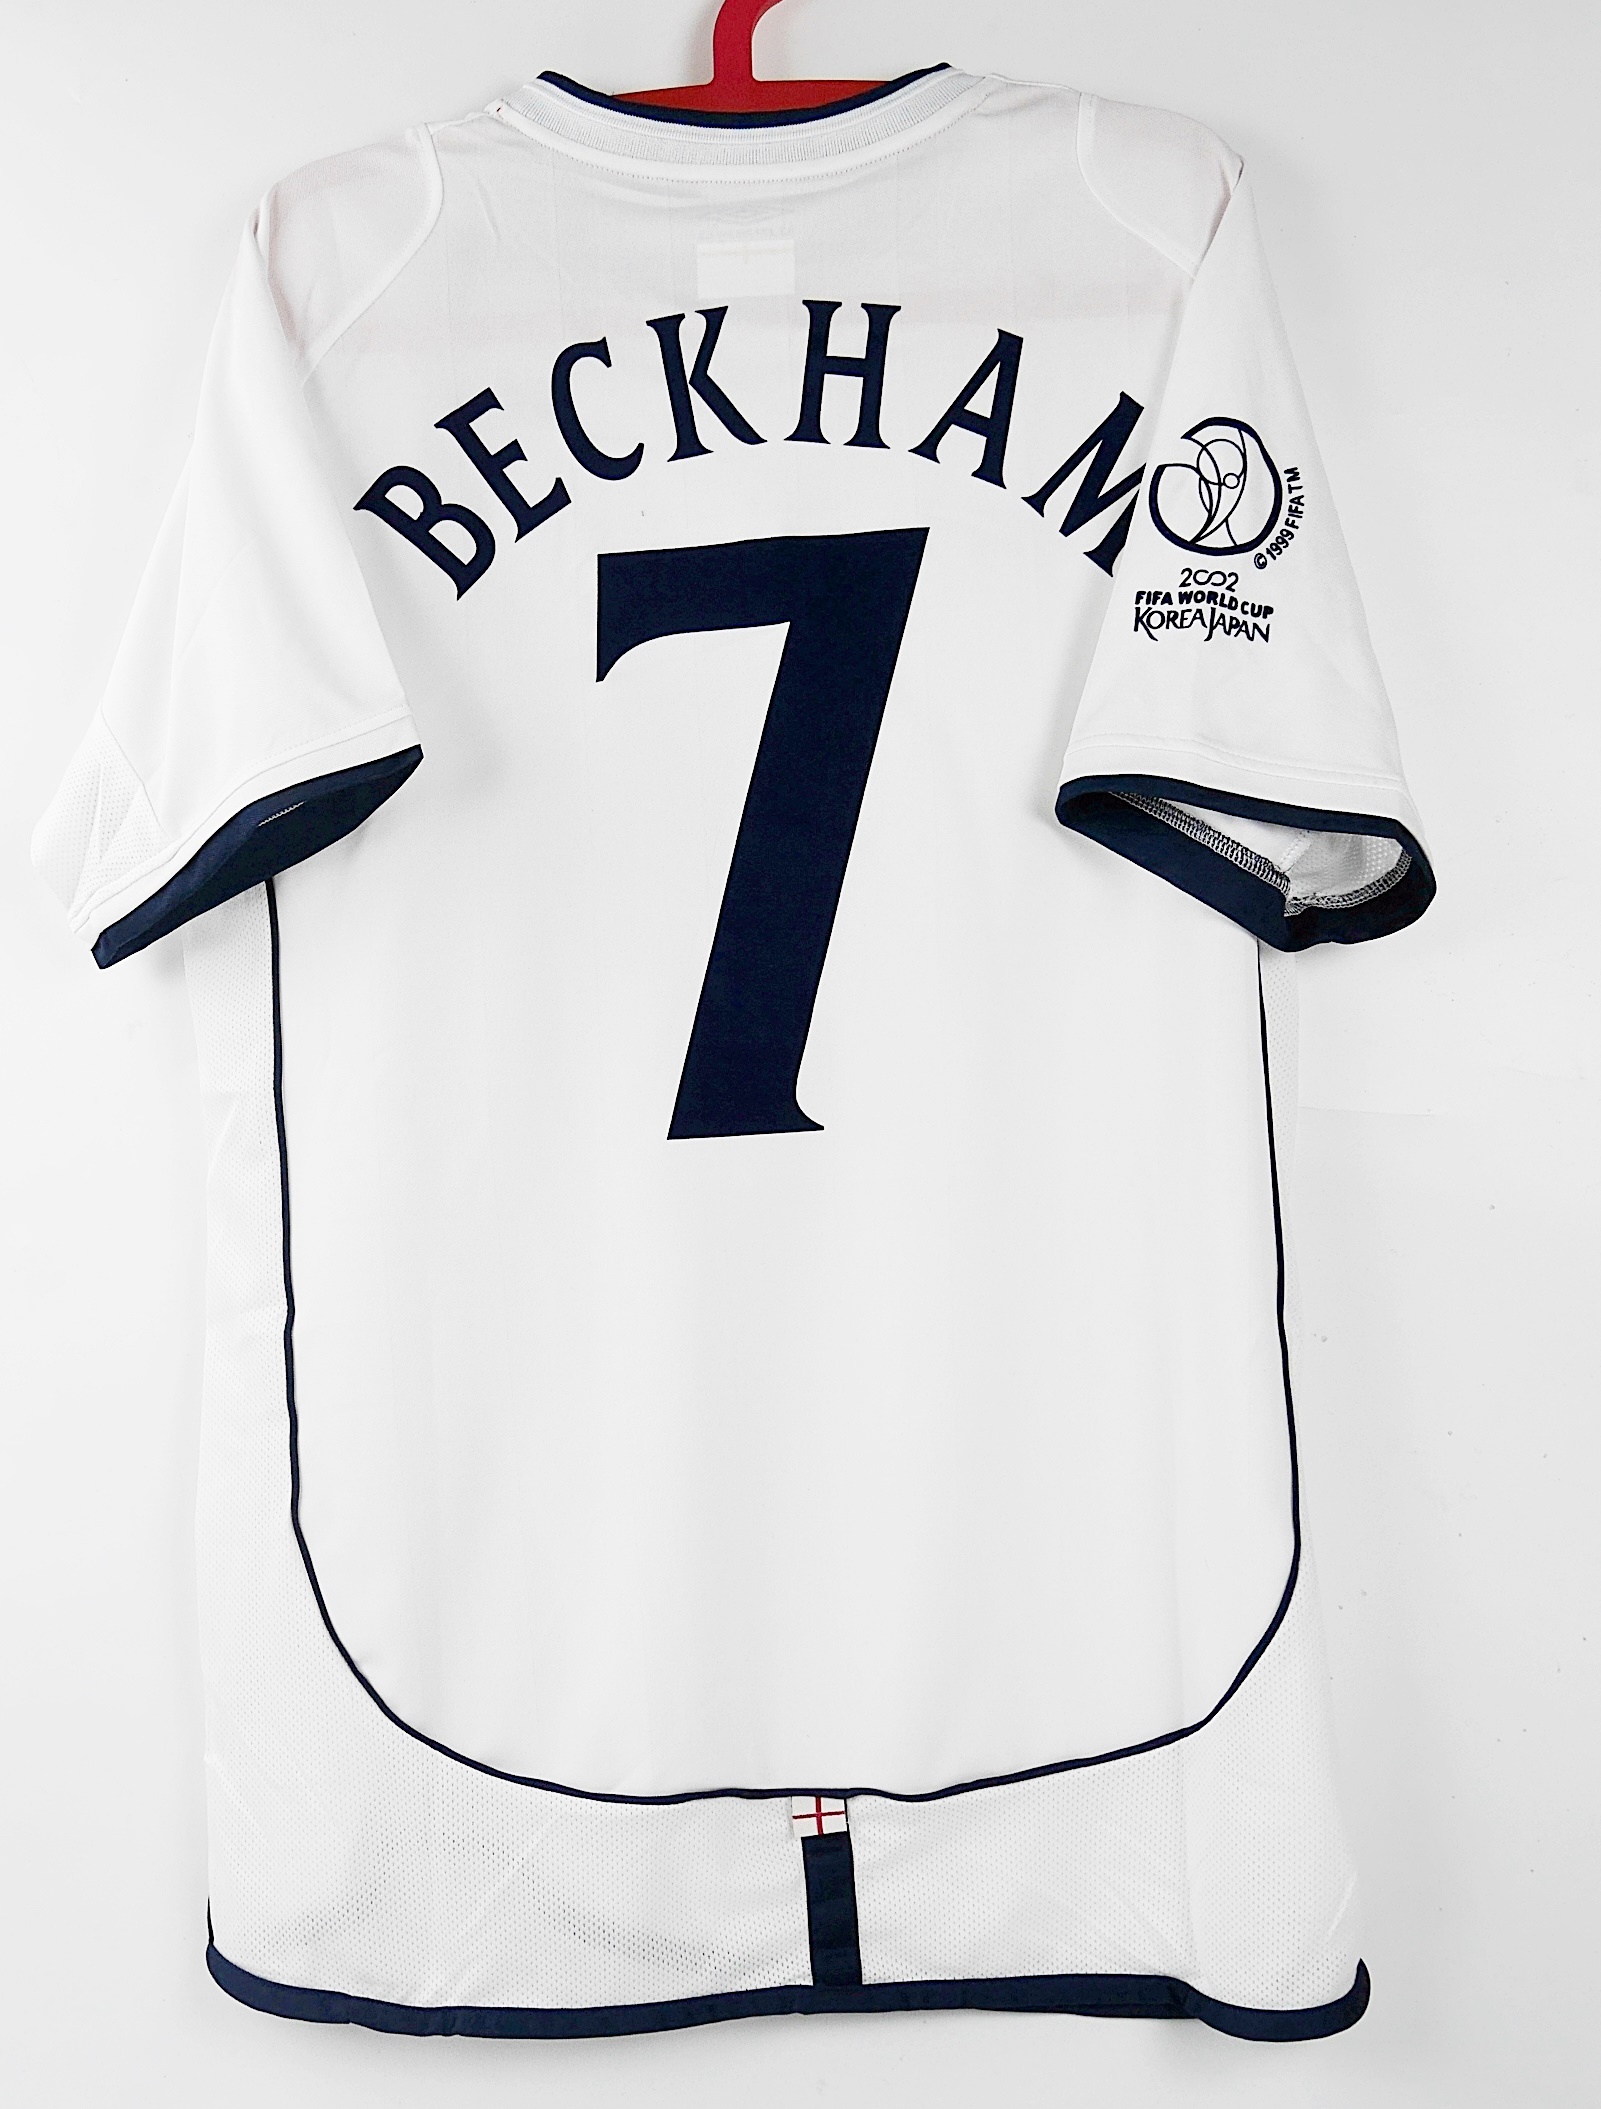 7 Beckham England Home Wc 2002 Full Retro Football Shirt Soccer Jersey